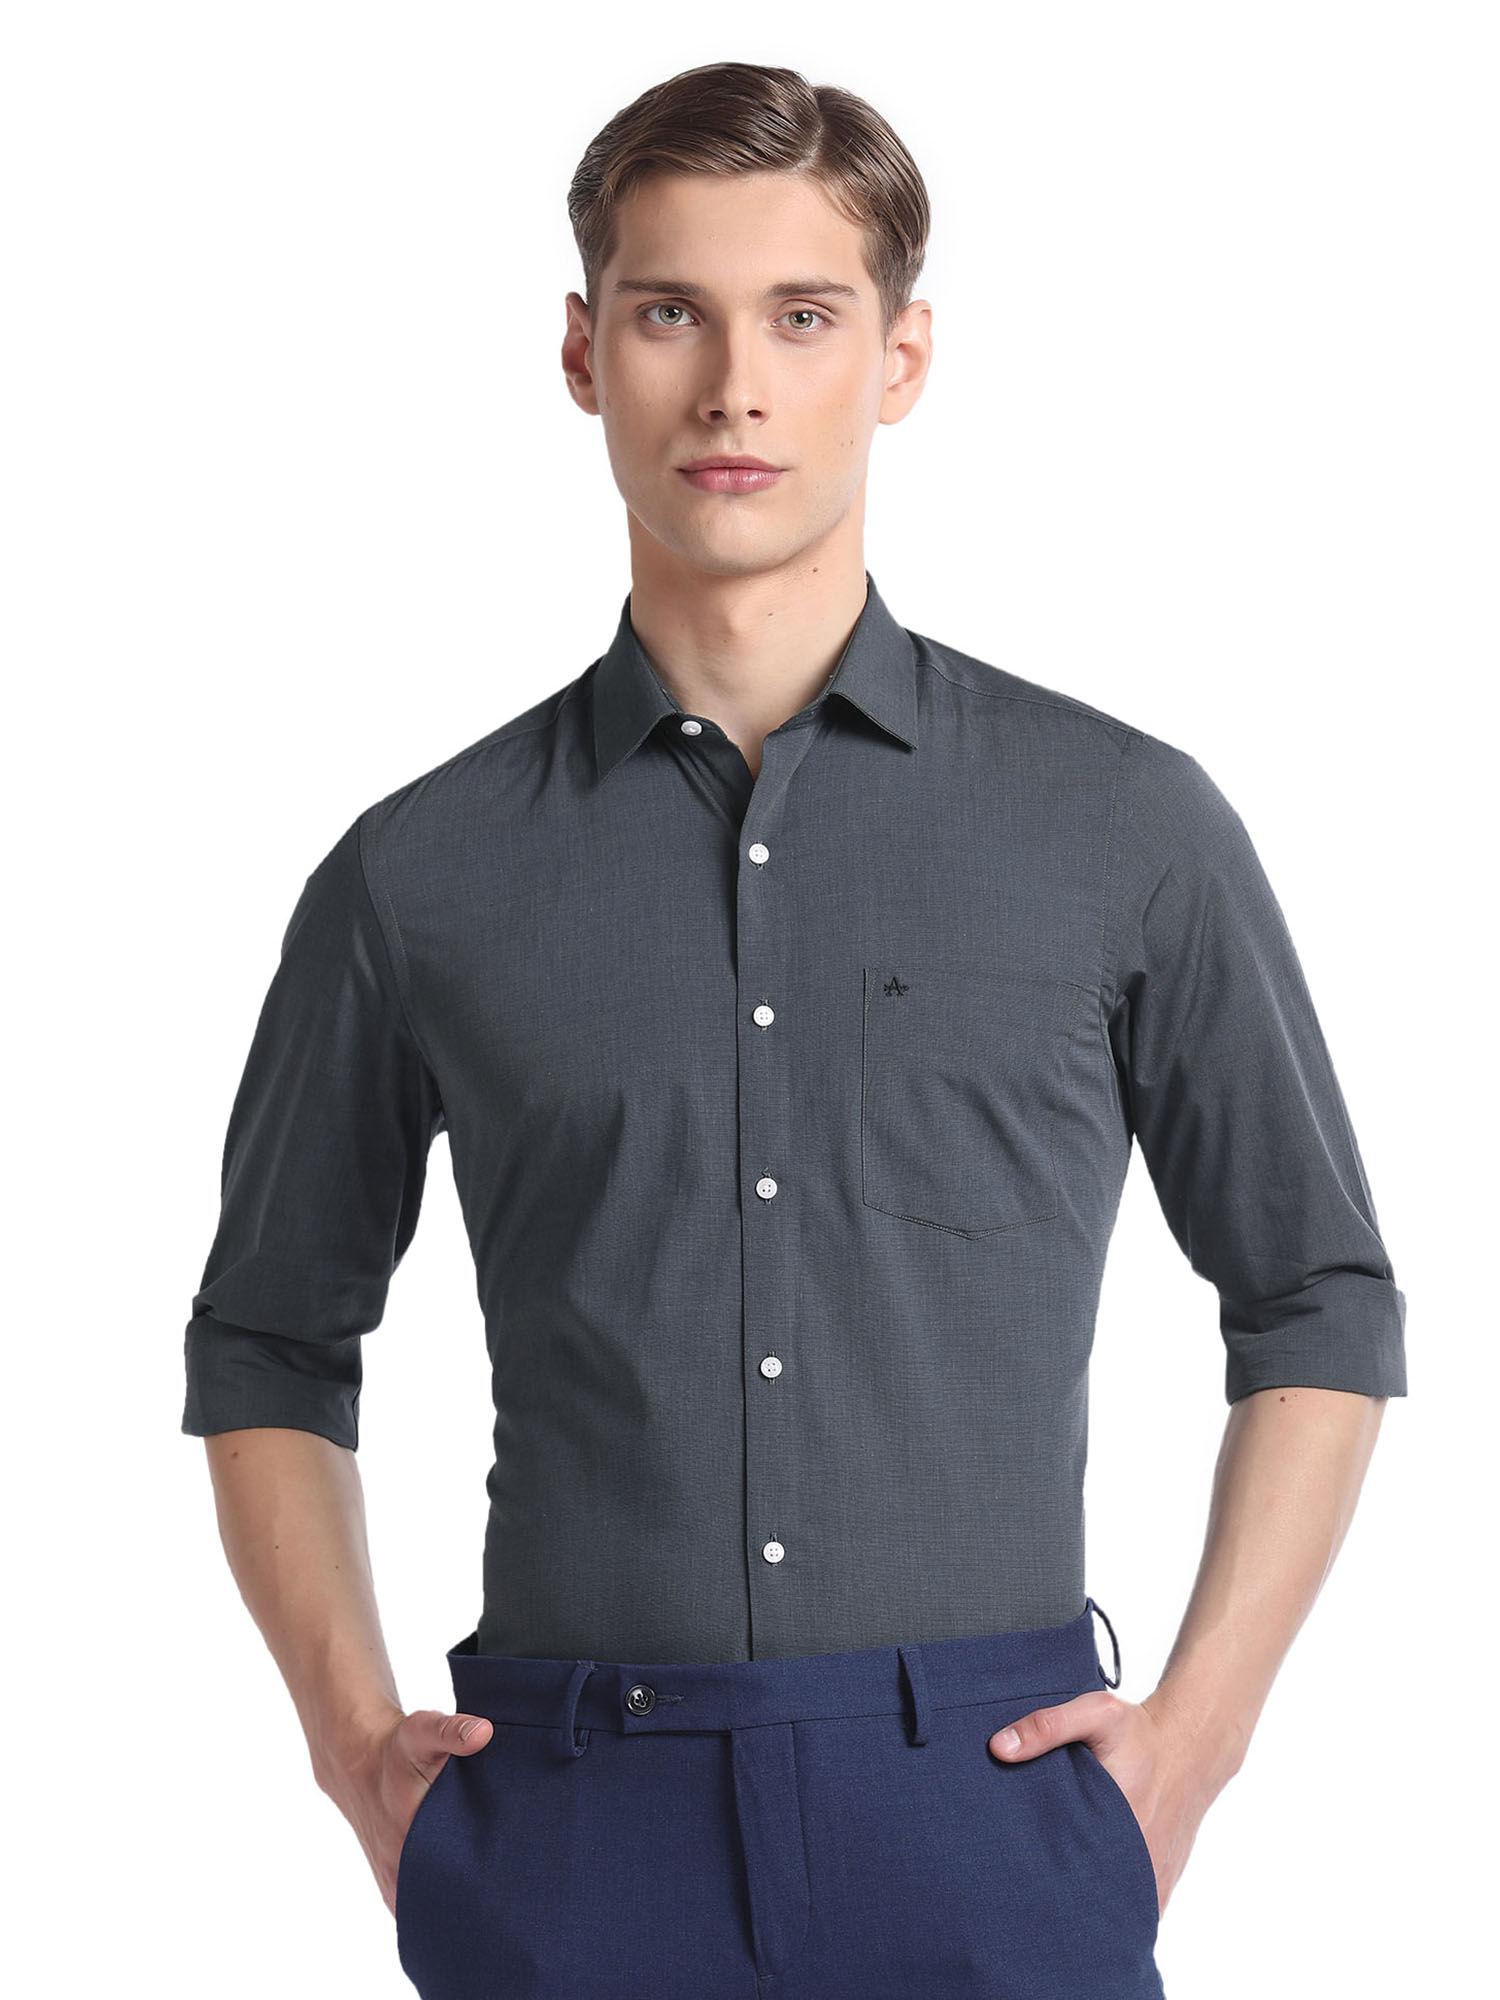 grey solid regular fit formal shirt